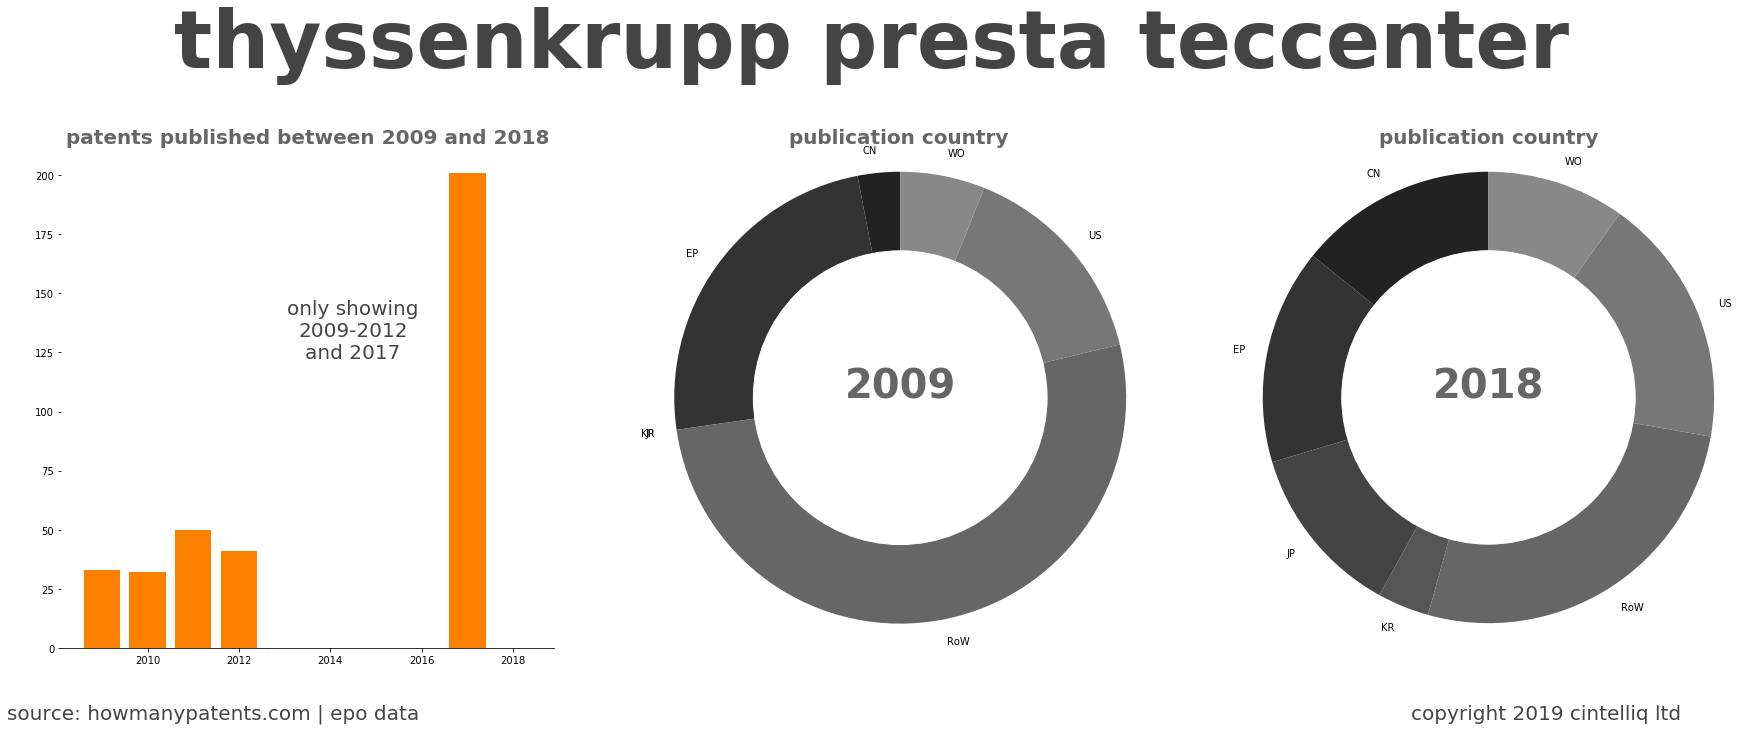 summary of patents for Thyssenkrupp Presta Teccenter